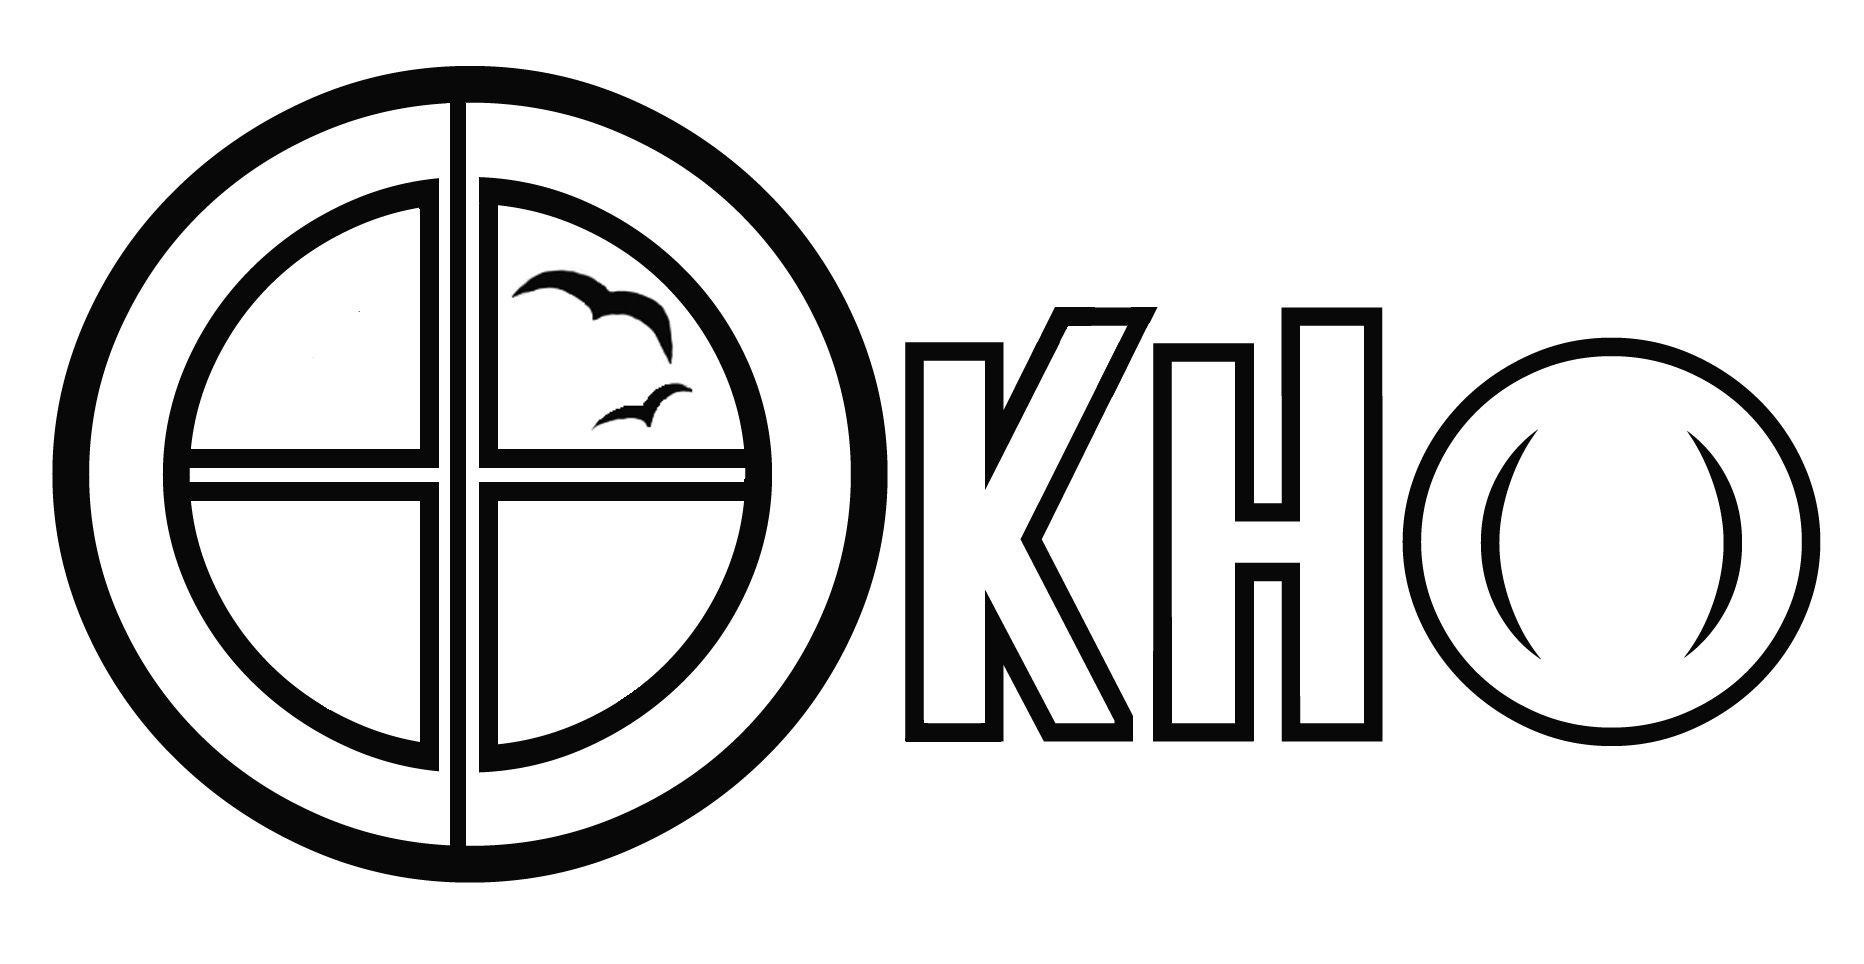 OKNO logo by Christine Zeytounian-Belous